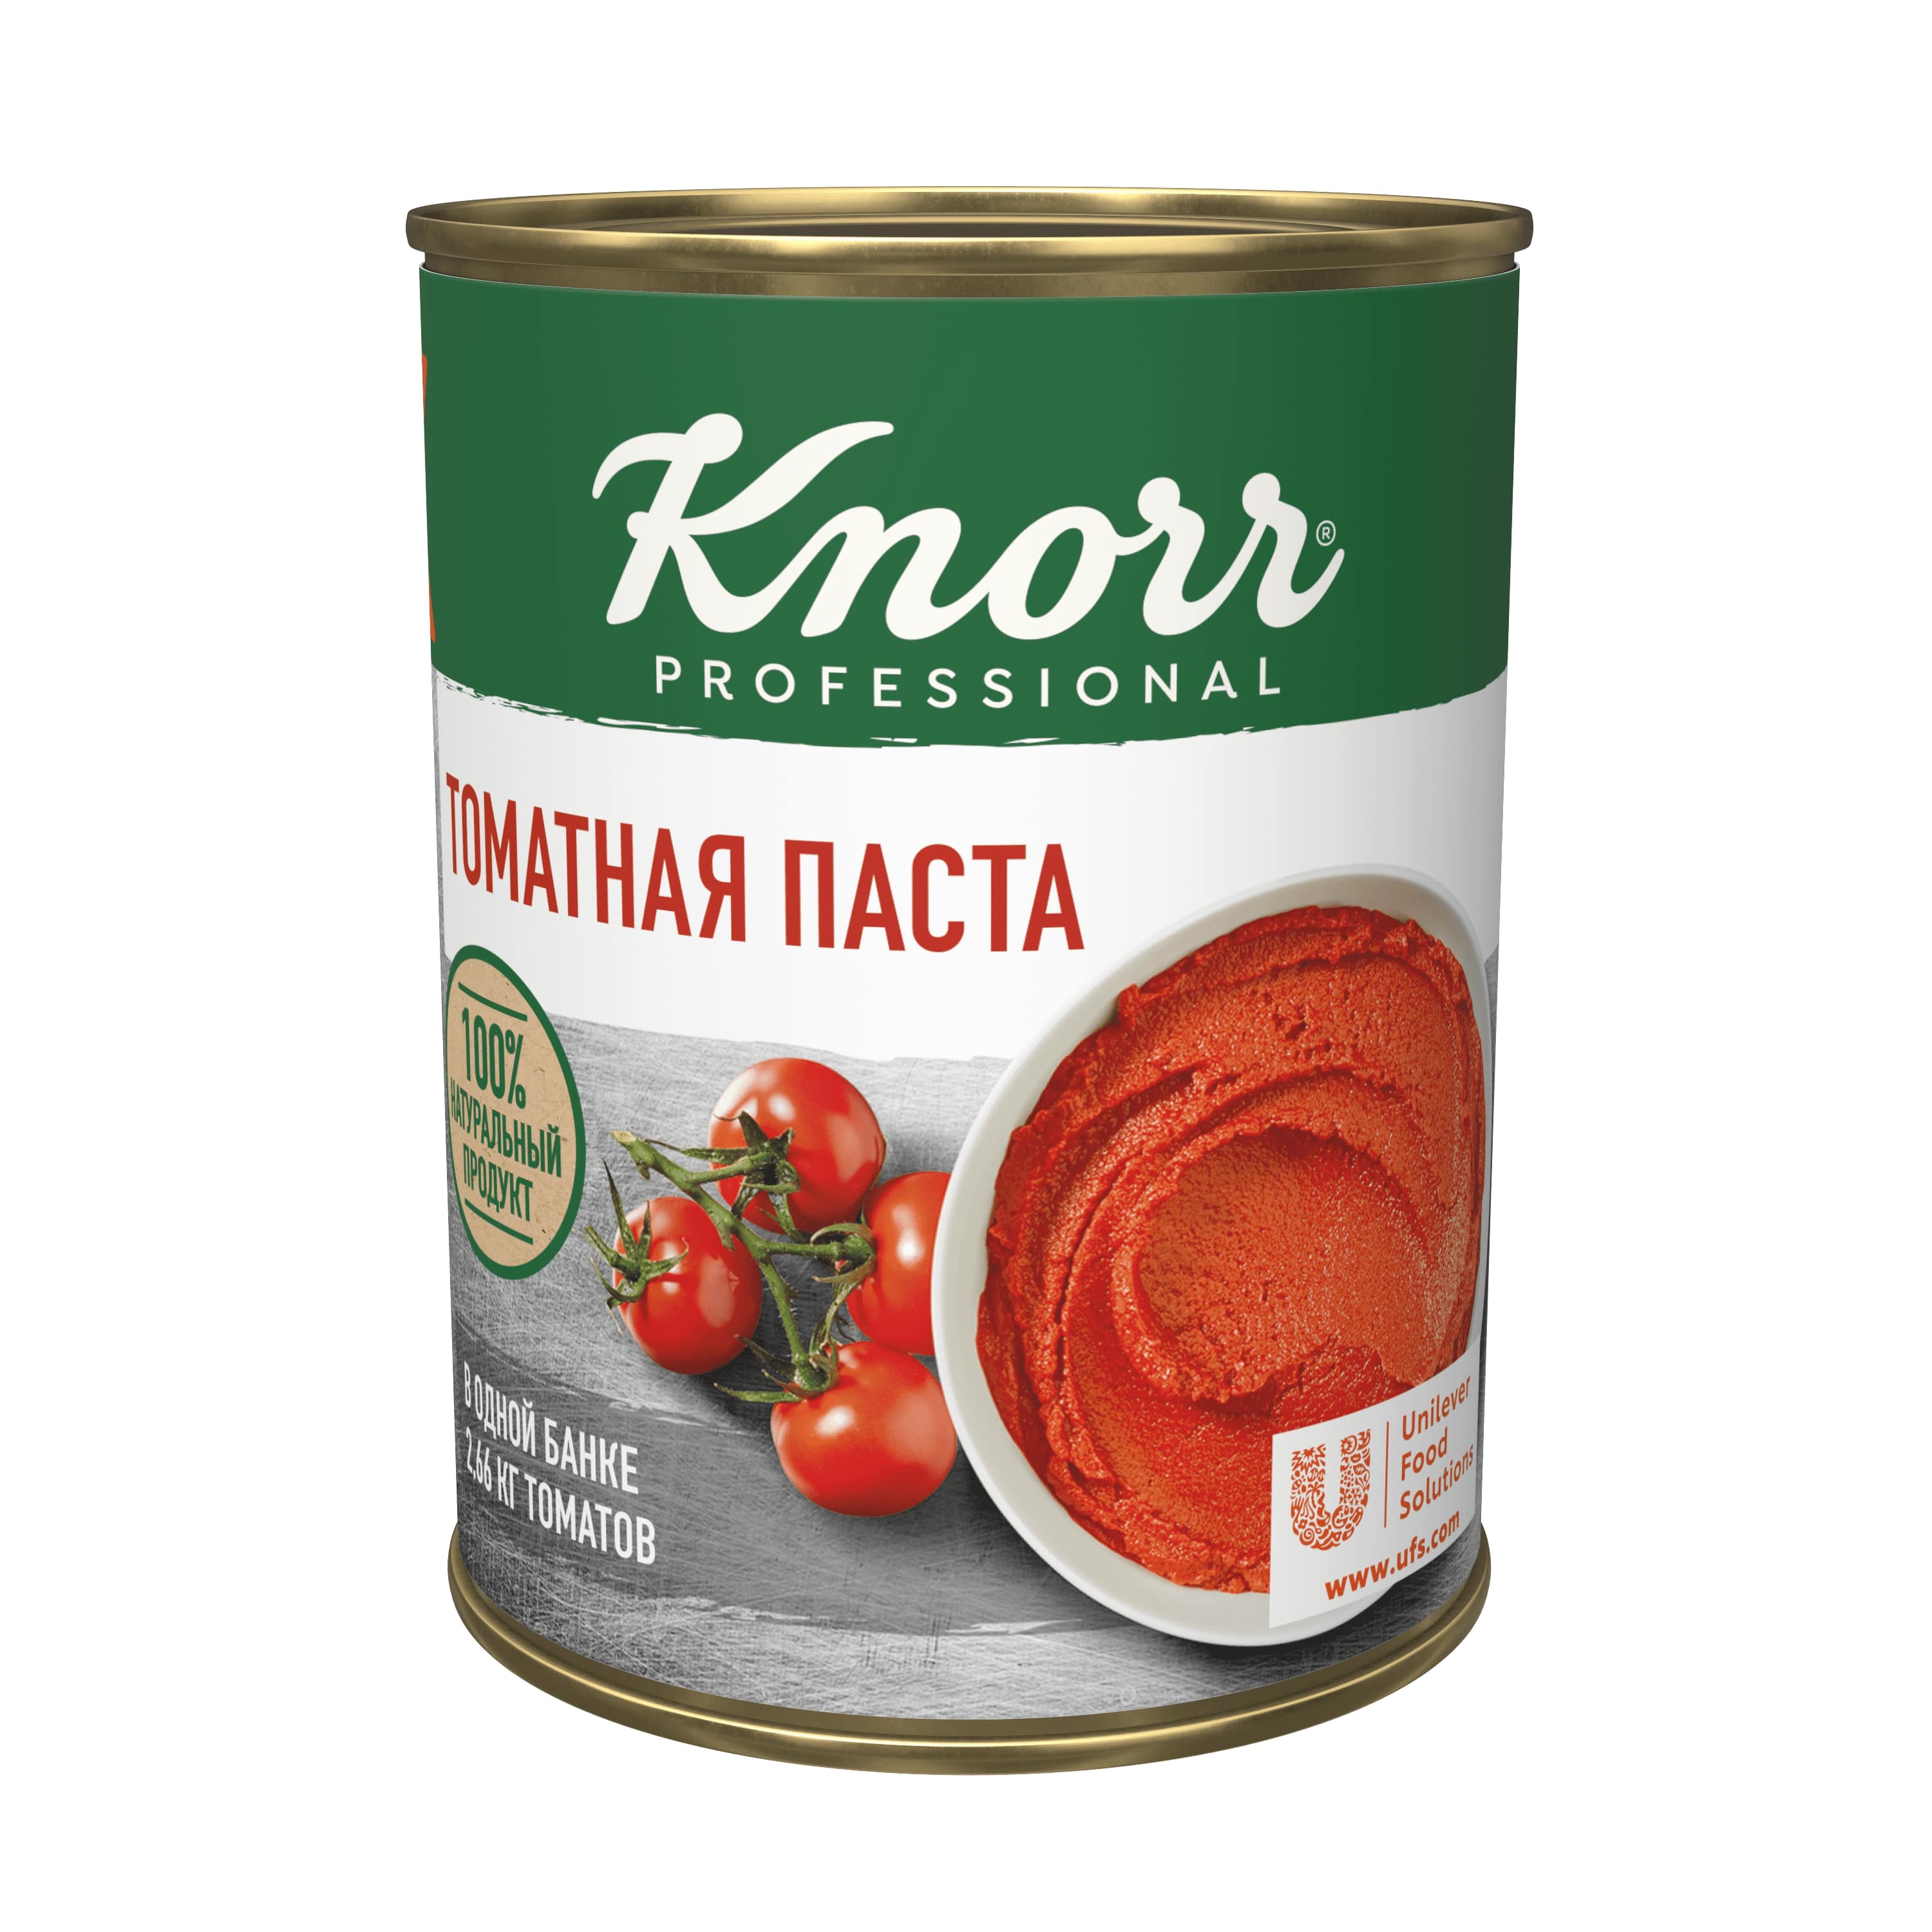 KNORR PROFESSIONAL Томатная паста (380 г) - Натуральная густая томатная паста с насыщенным вкусом и ярким цветом.